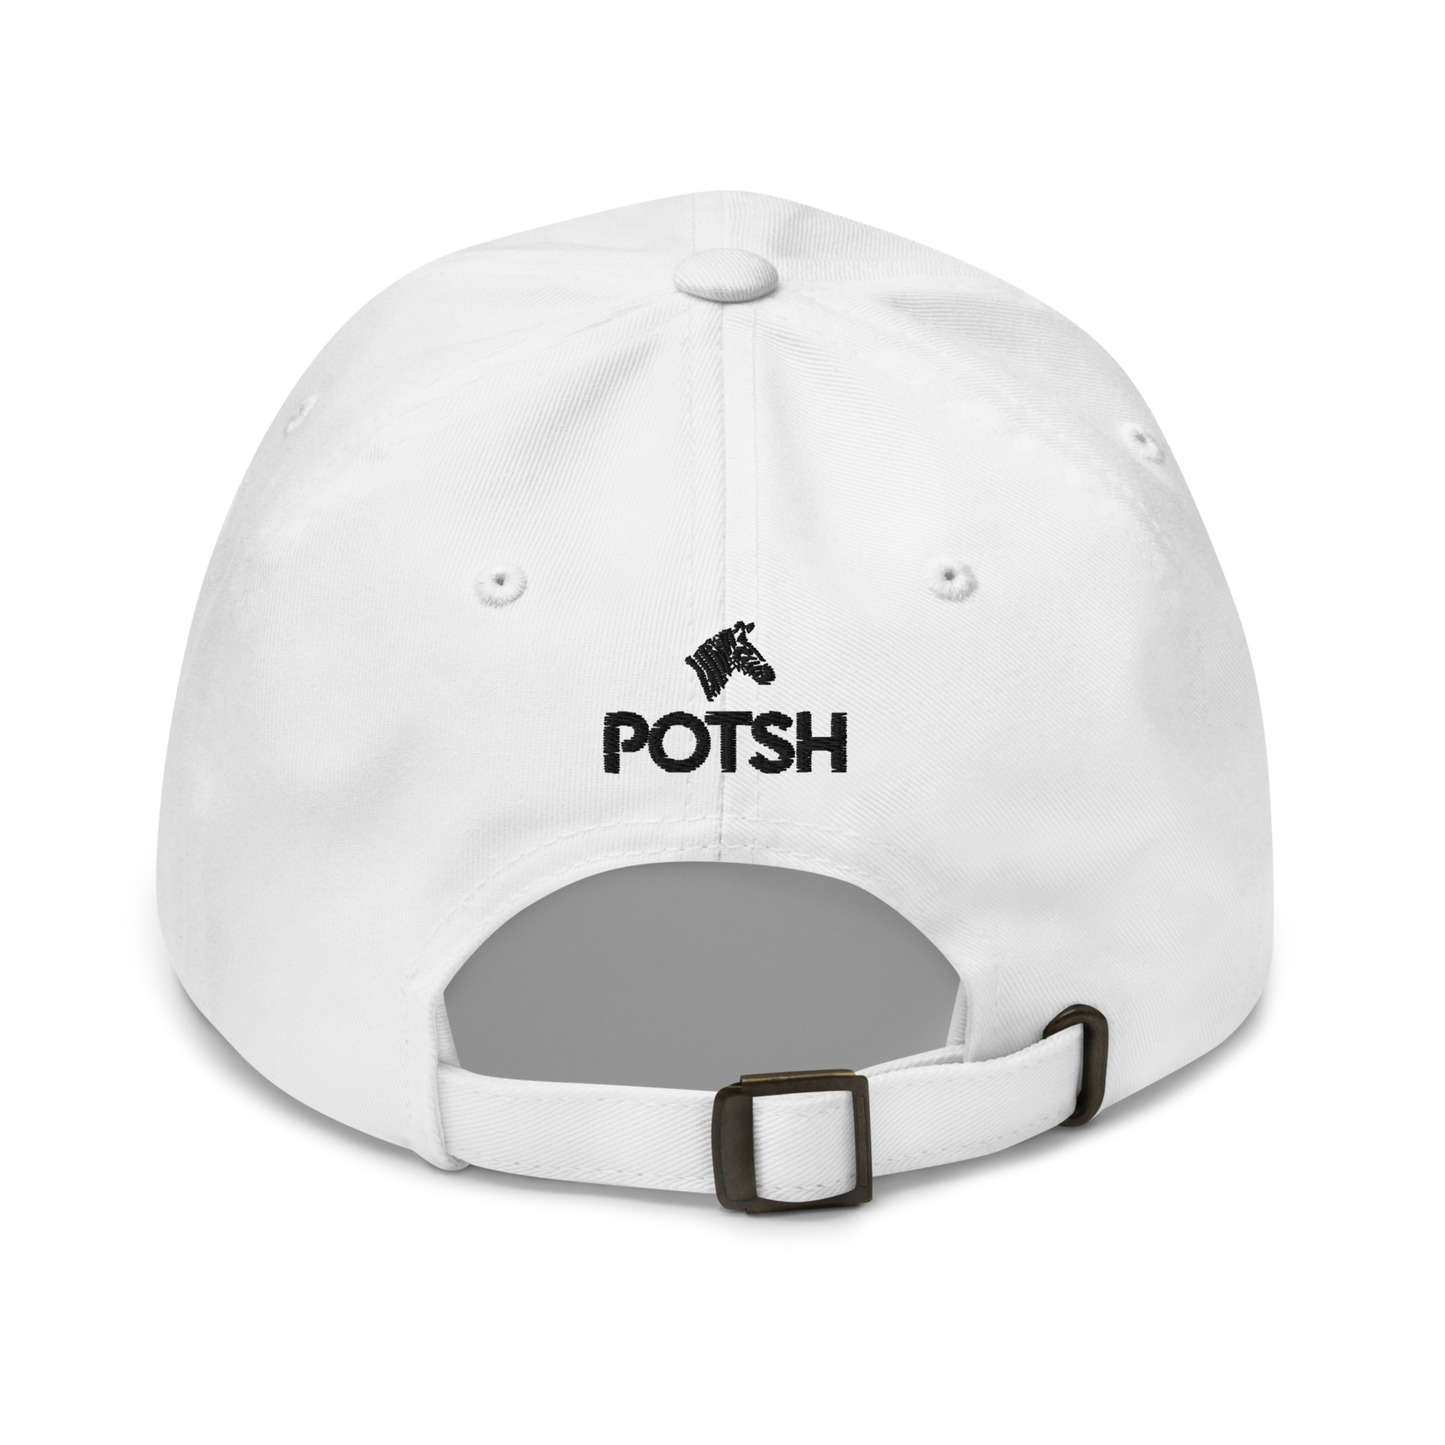 POTSH's "UNCOMMON FAVOR." Premium White Hat